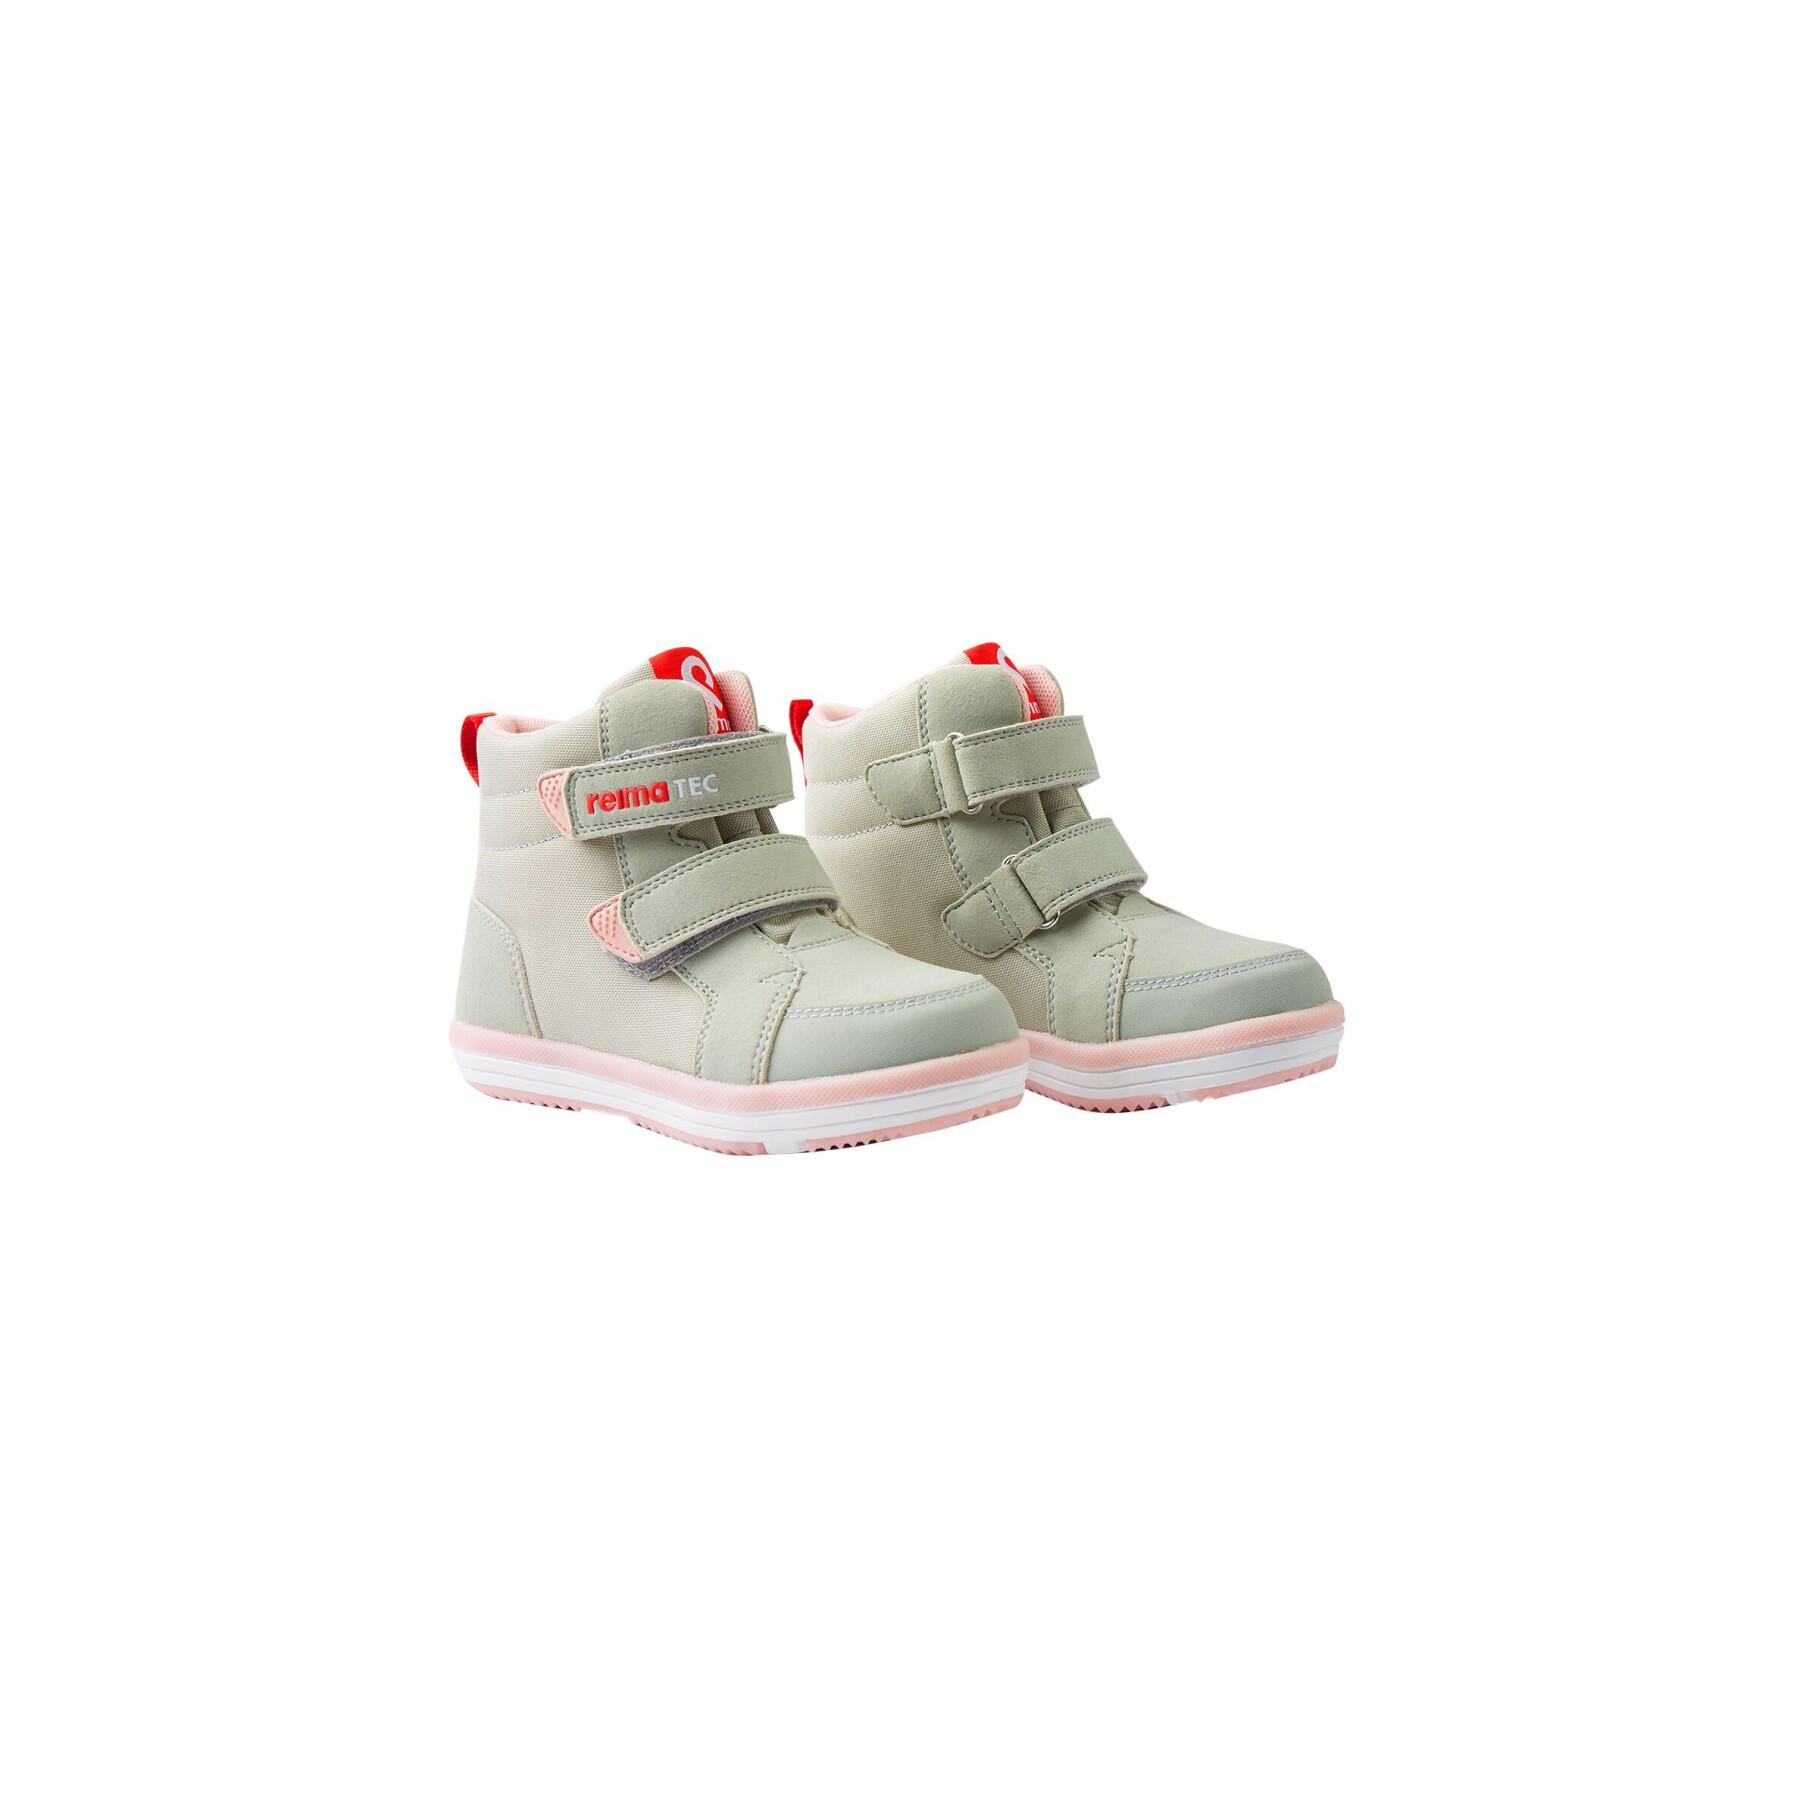 Children's sneakers Reima Reima tec Patter